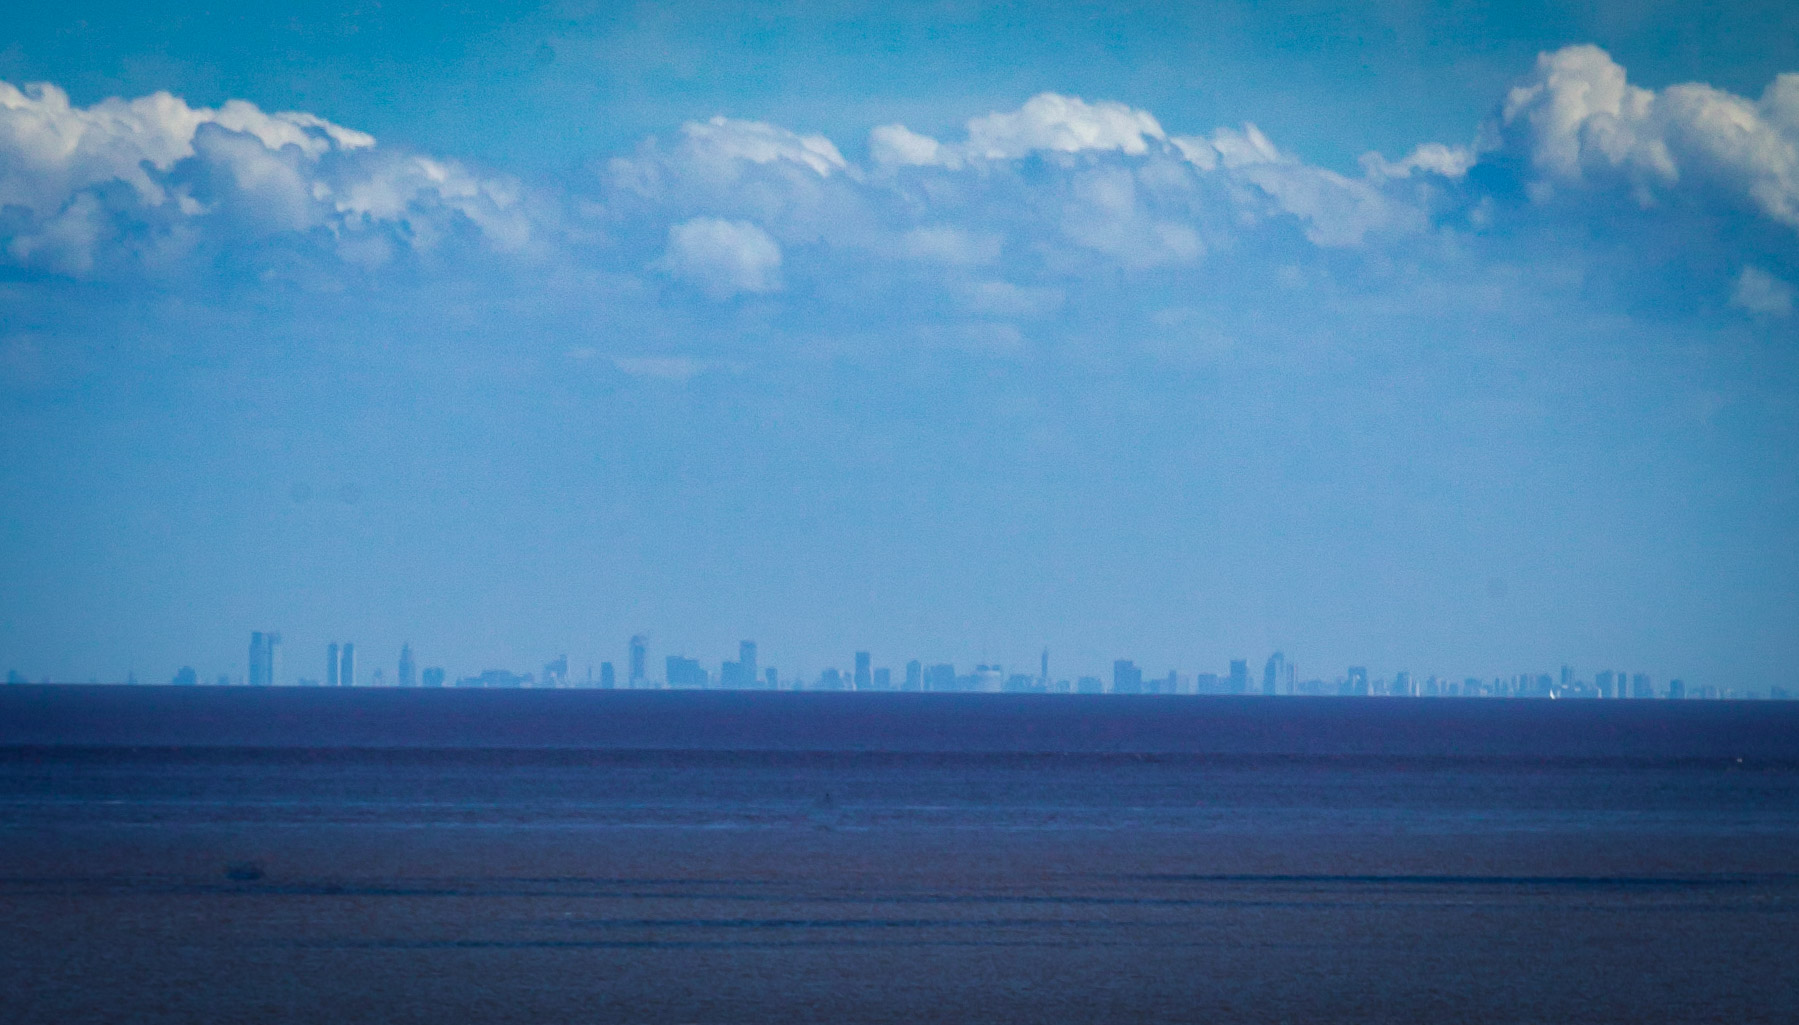 Colonia, Uruguay – BA in the distance